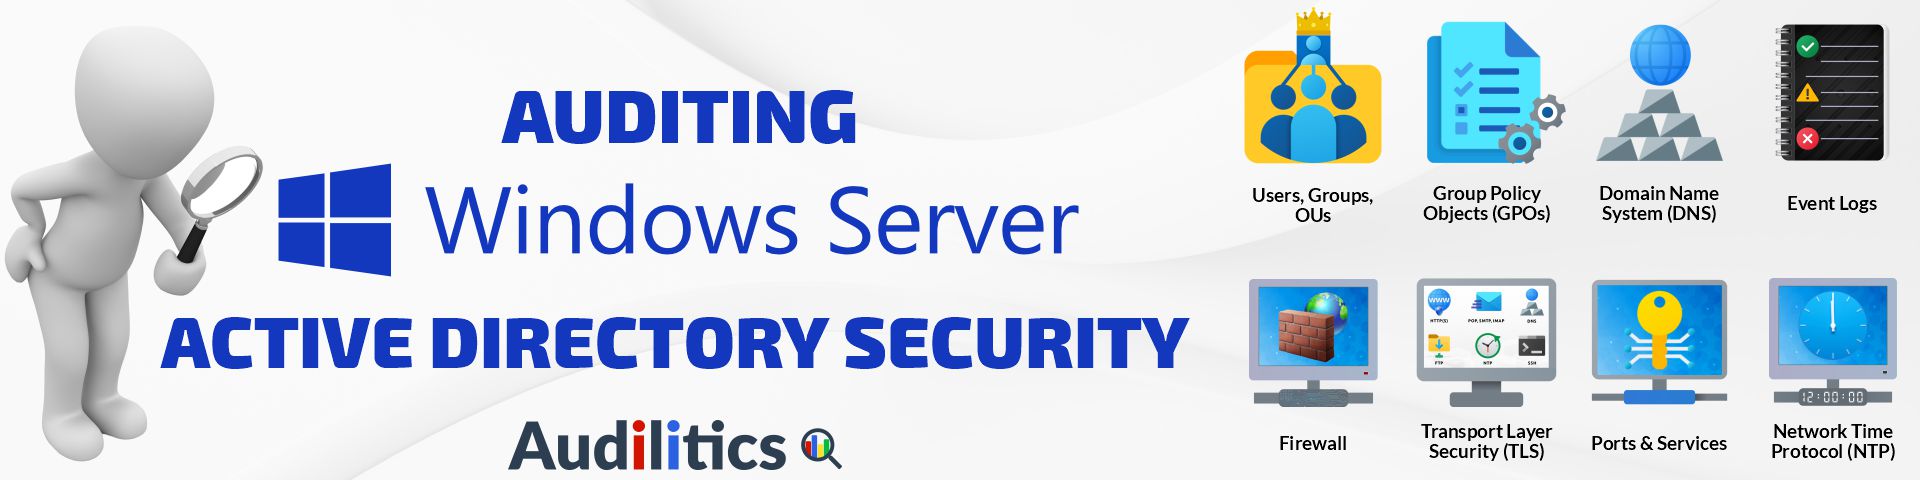 Auditing Windows Server AD Security